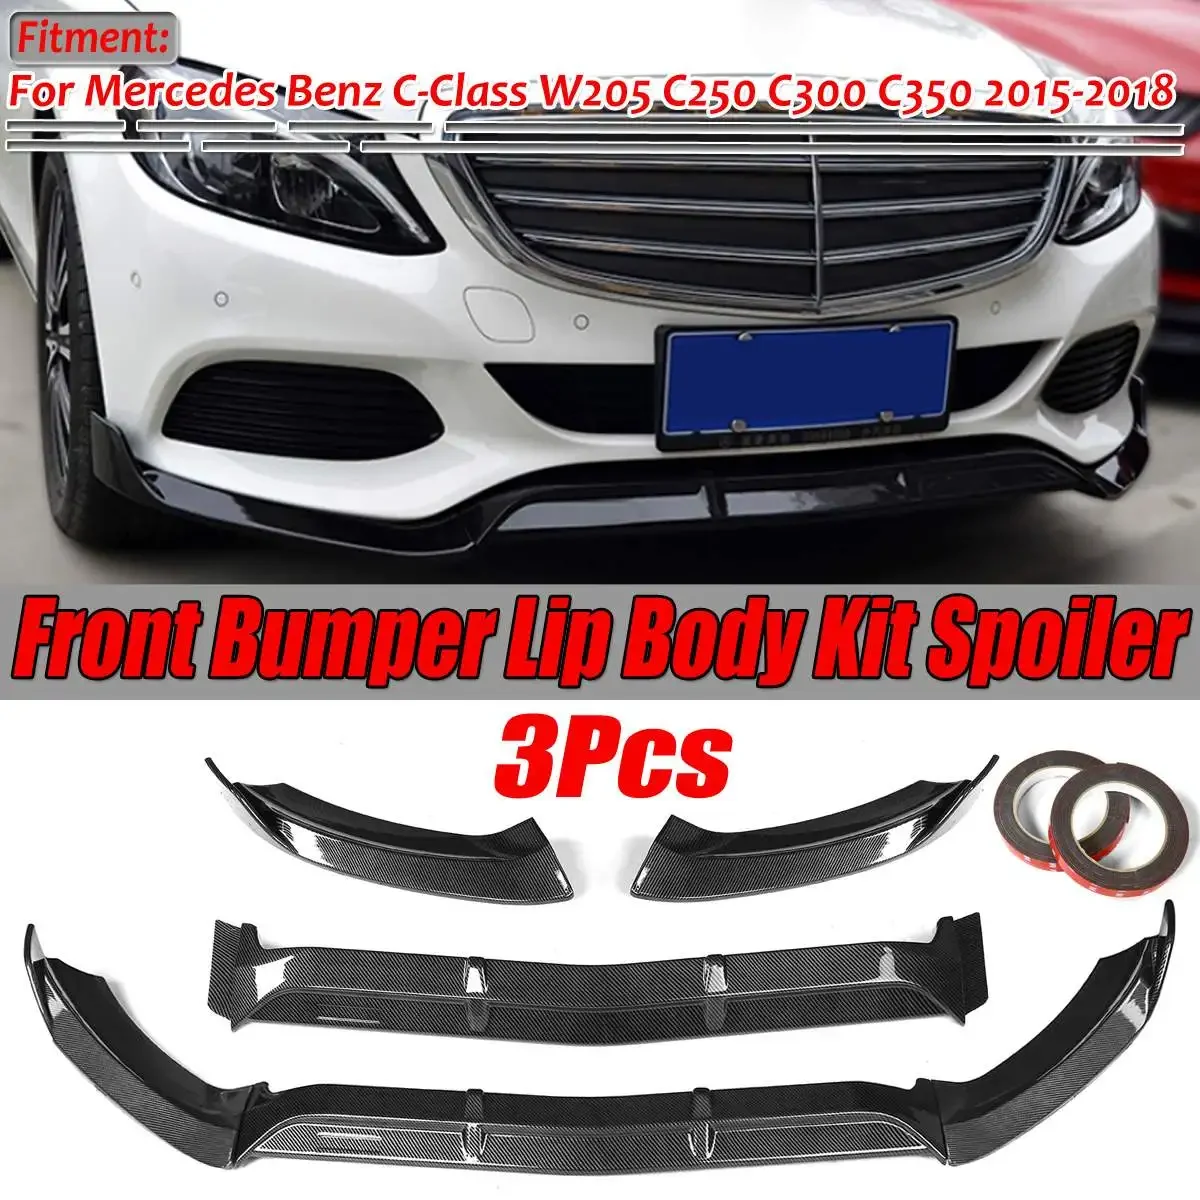 

W205 3PCS Car Front Bumper Splitter Lip Body Kit Spoiler Diffuser For Mercedes For Benz C-Class W205 C250 C300 C350 2015-2018